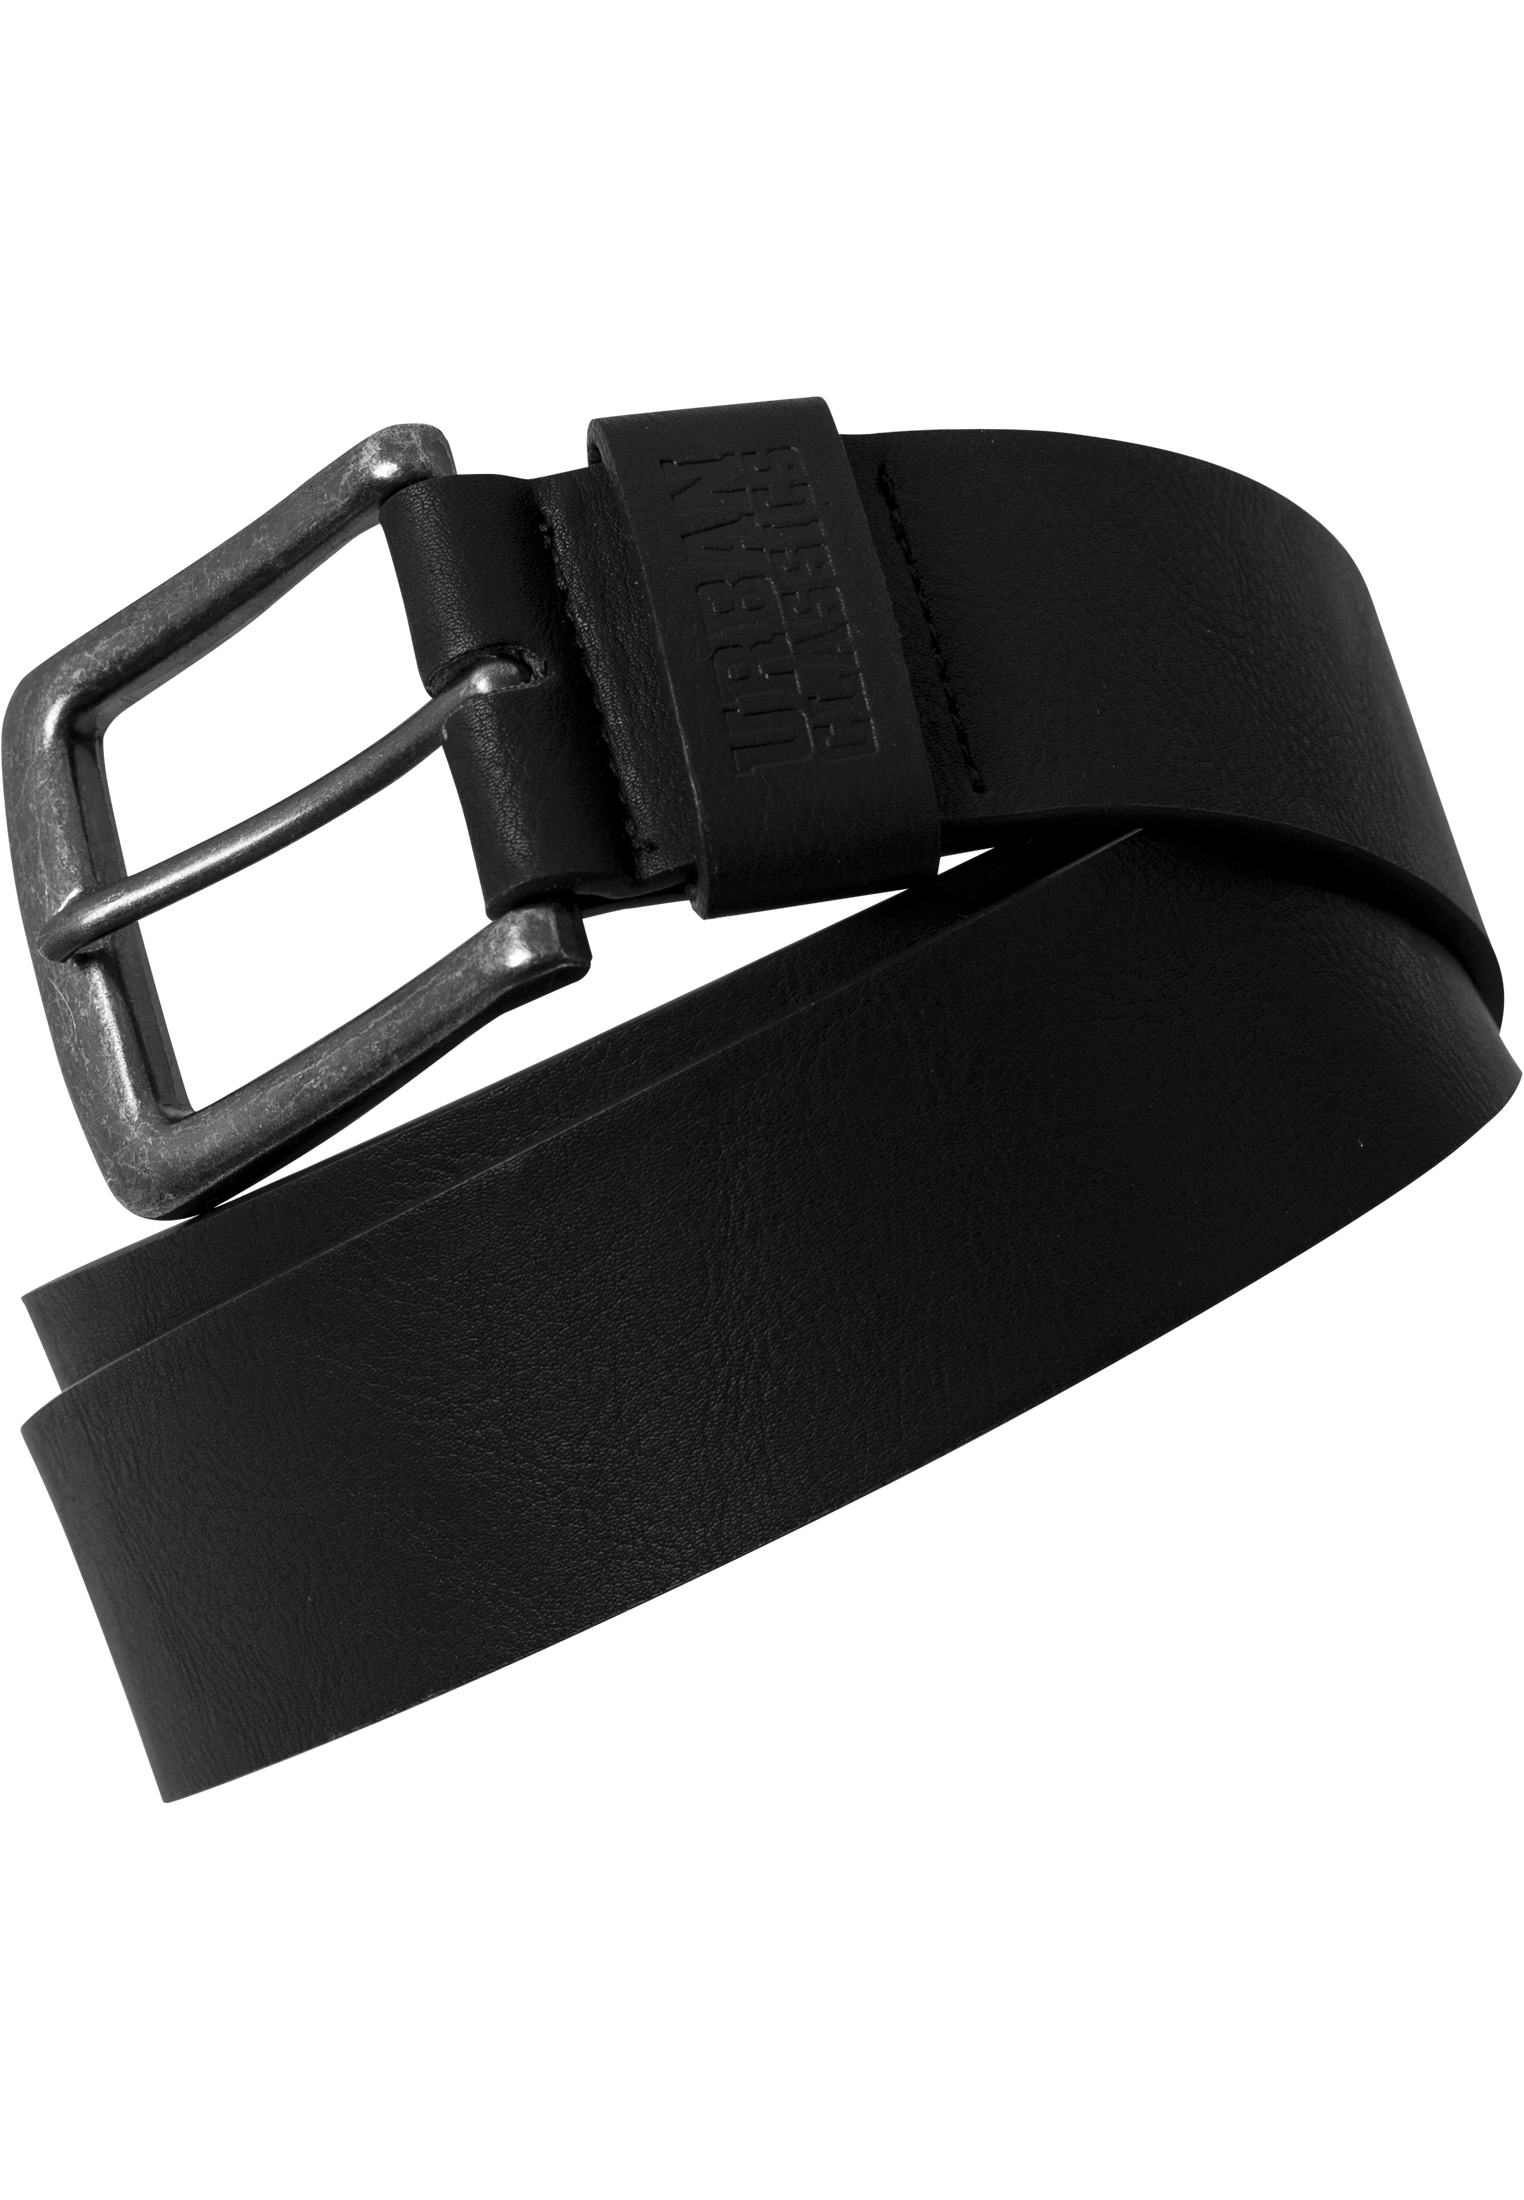 G?rtel Leather Imitation Belt in Farbe black